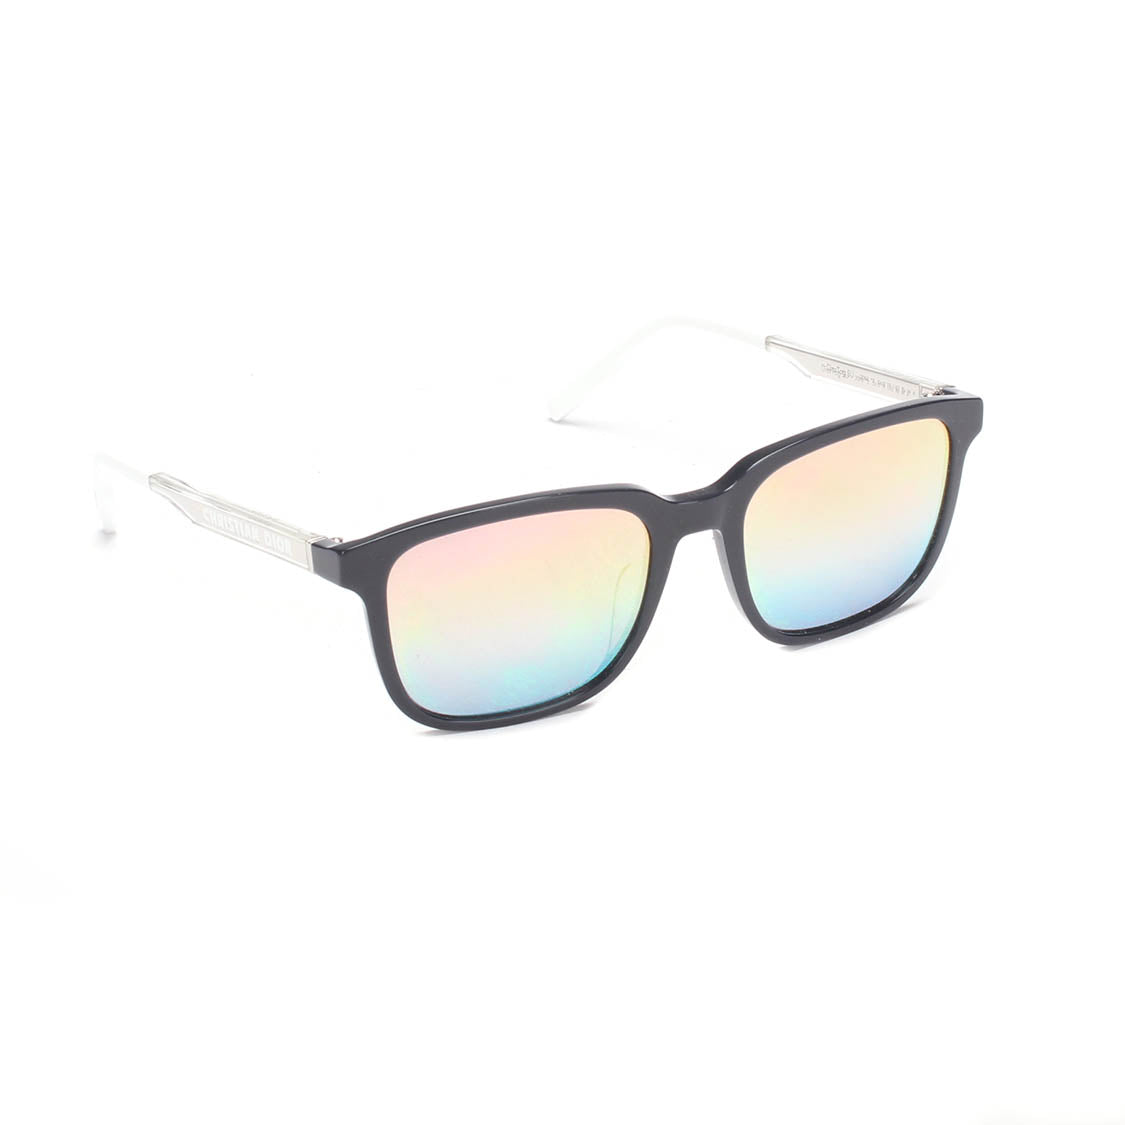 DiorTag SU Tinted Sunglasses